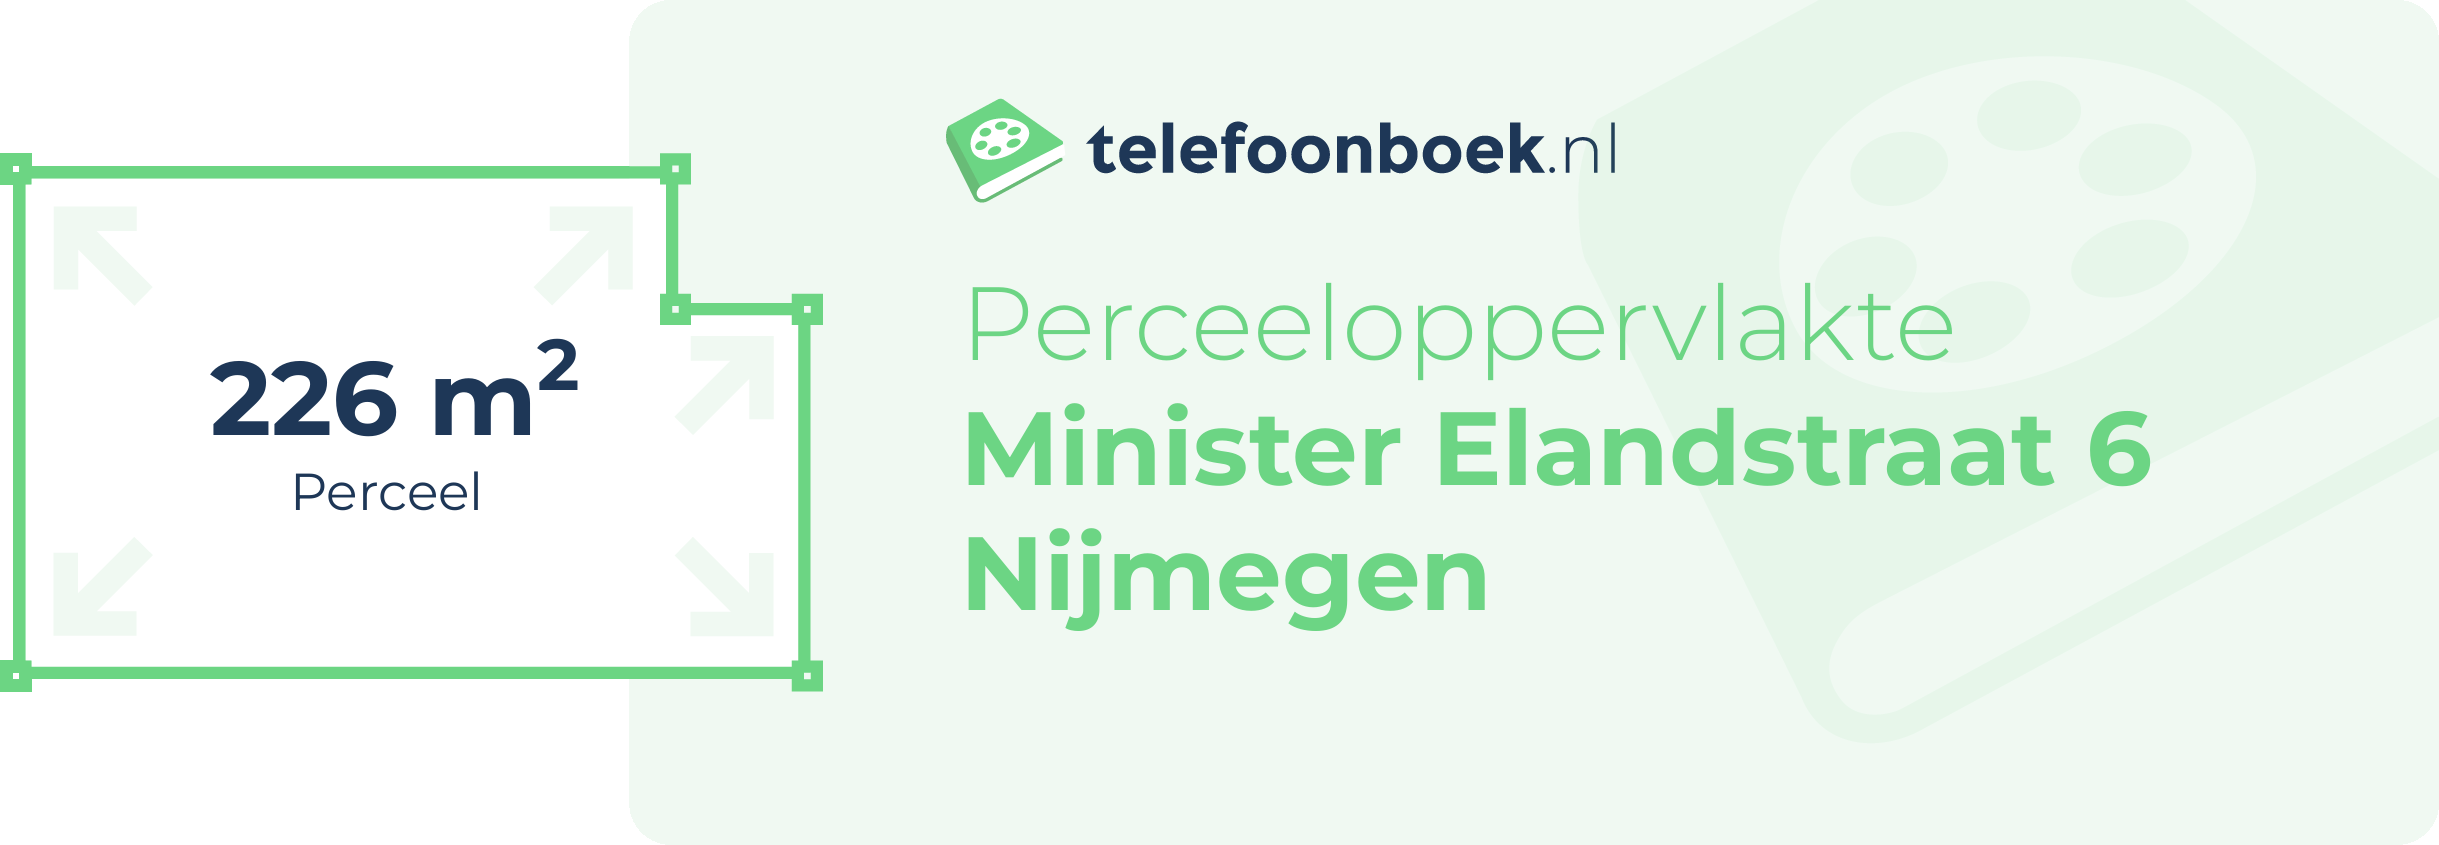 Perceeloppervlakte Minister Elandstraat 6 Nijmegen